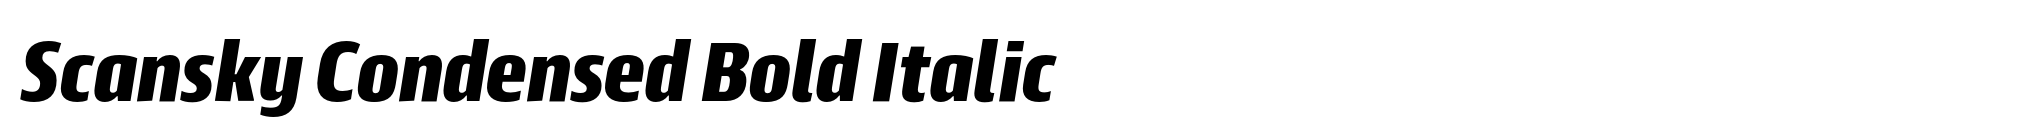 Scansky Condensed Bold Italic image